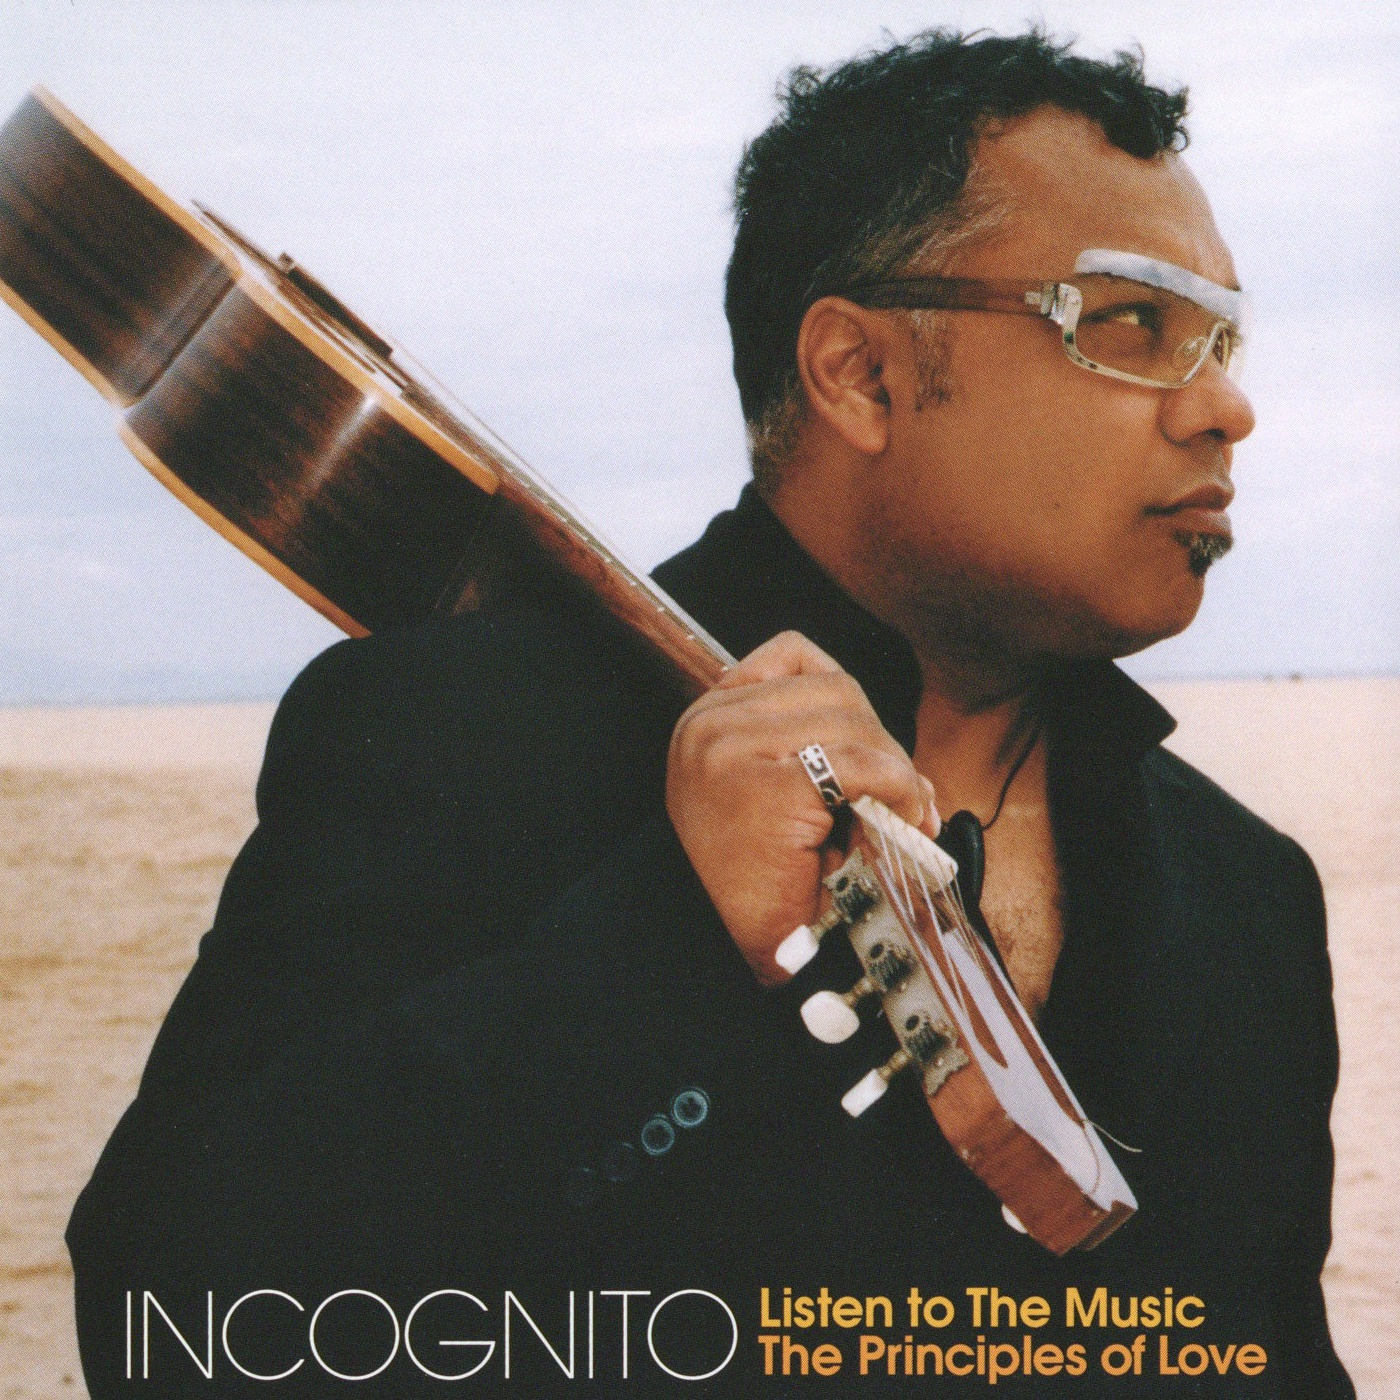 Incognito-Listen to The Music (Single Edit)